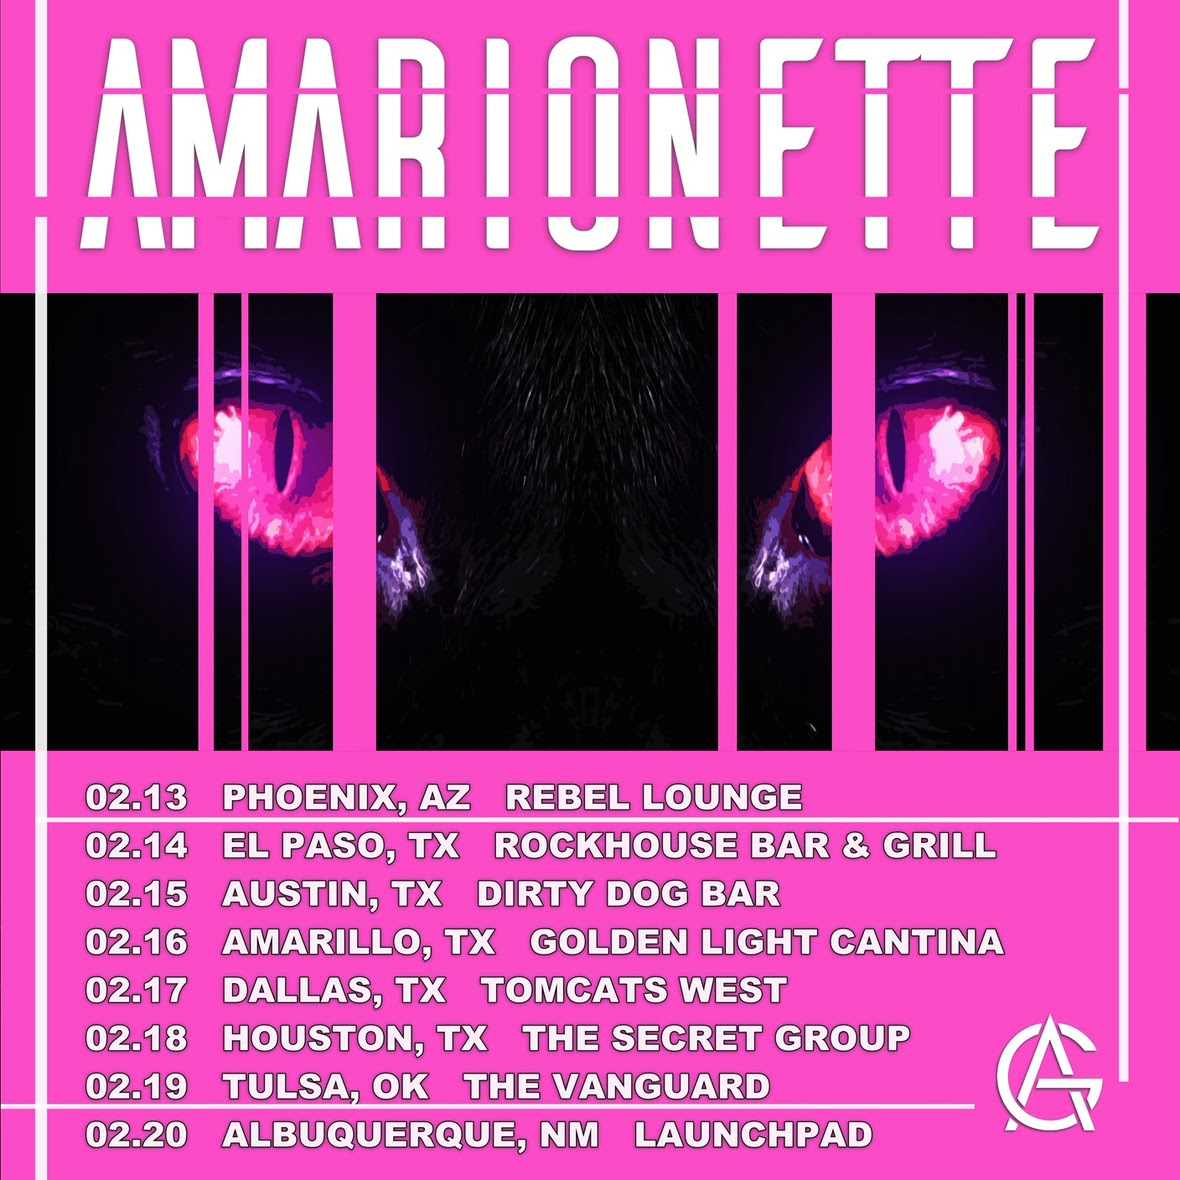 Amarionette-tour-dates.jpg